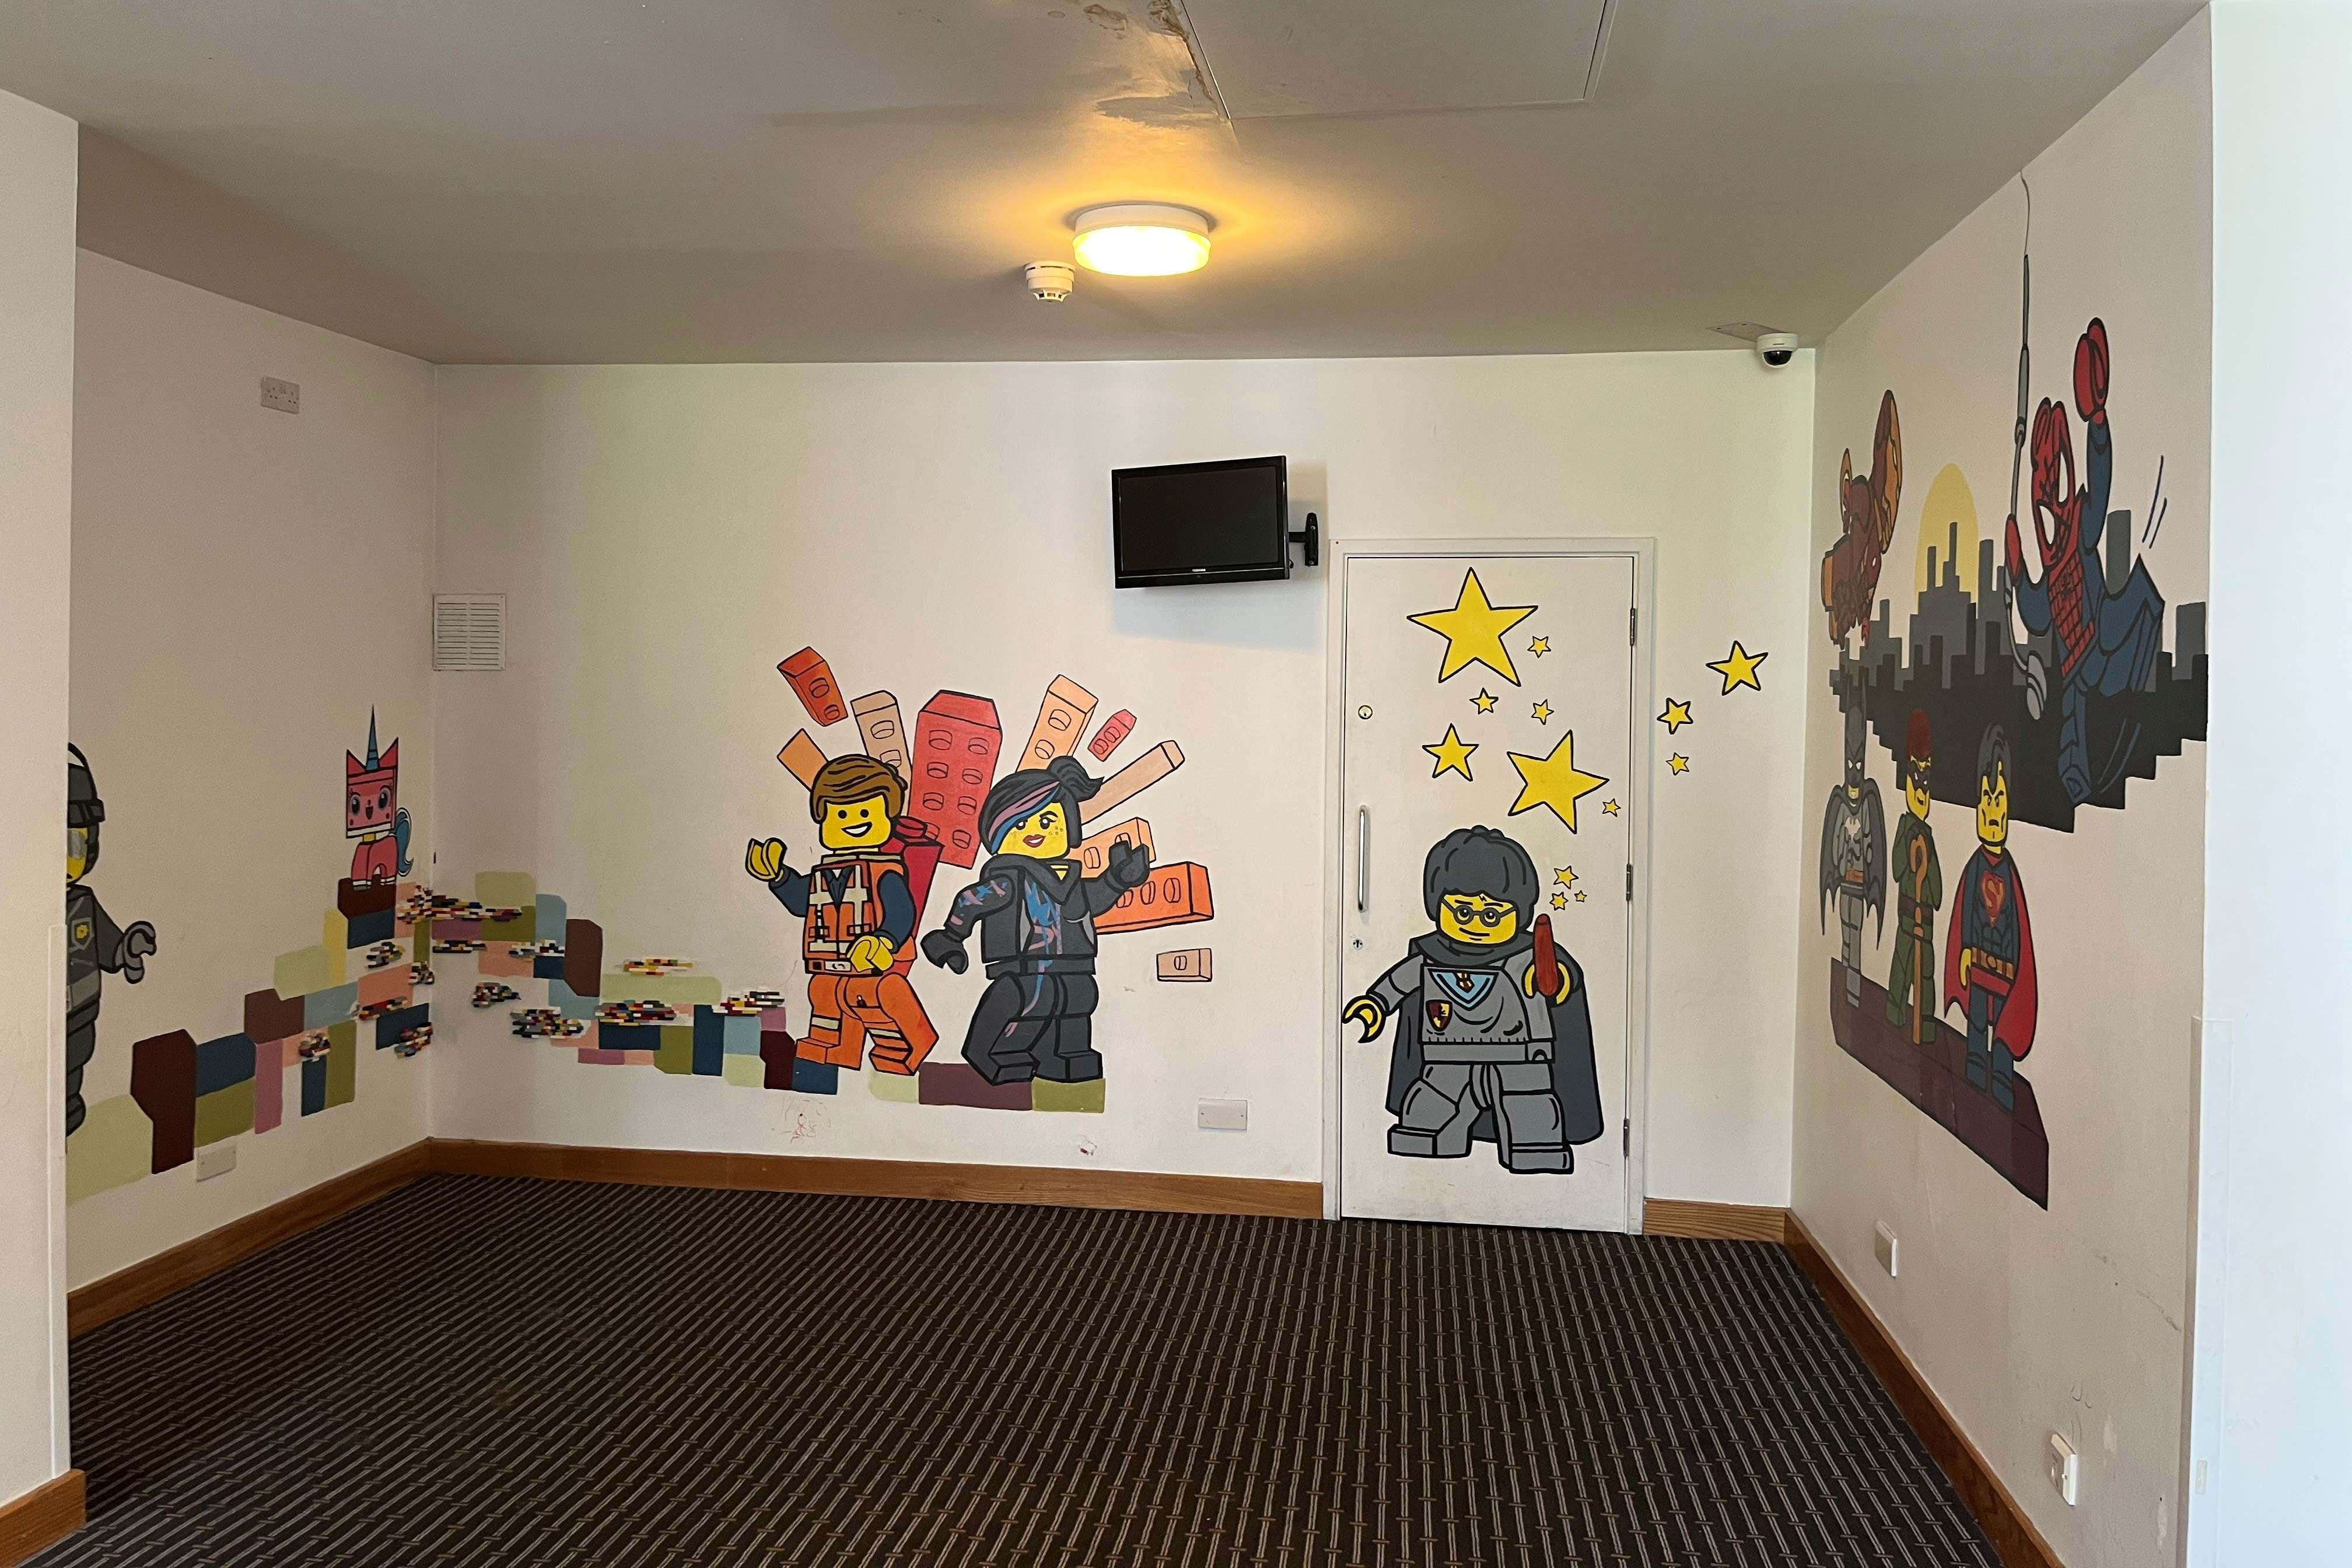 Empty room with lego murals